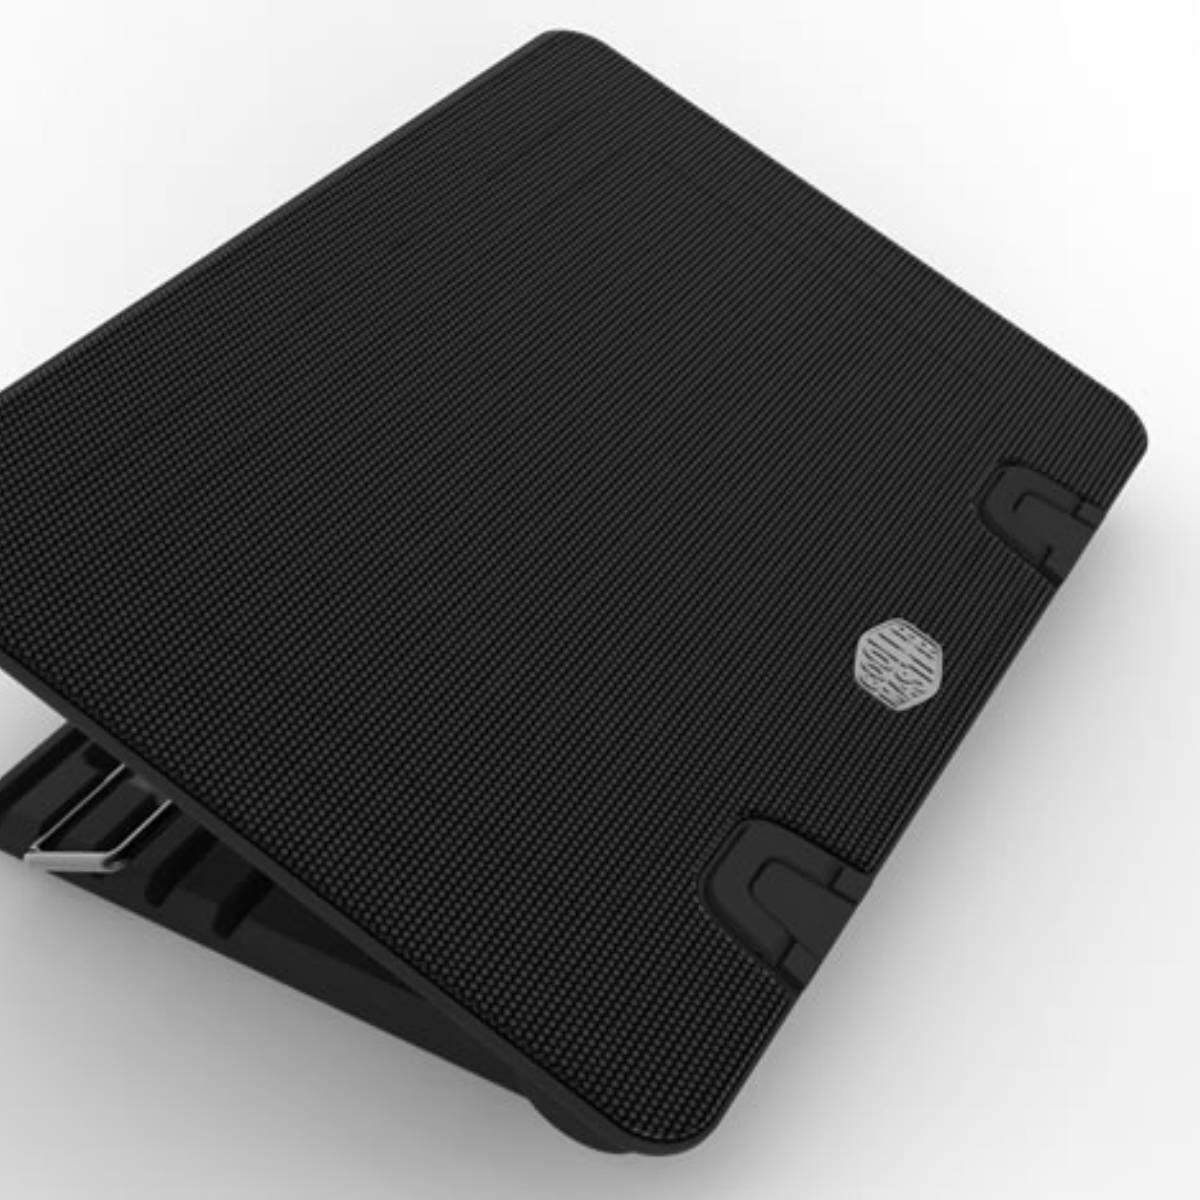 Cooler Master ERGOSTAND IV 140mm Silent Fan Height-Adjustable Ergonomic Mesh 4 USB 2.0 Notebook Cooler for up to 17